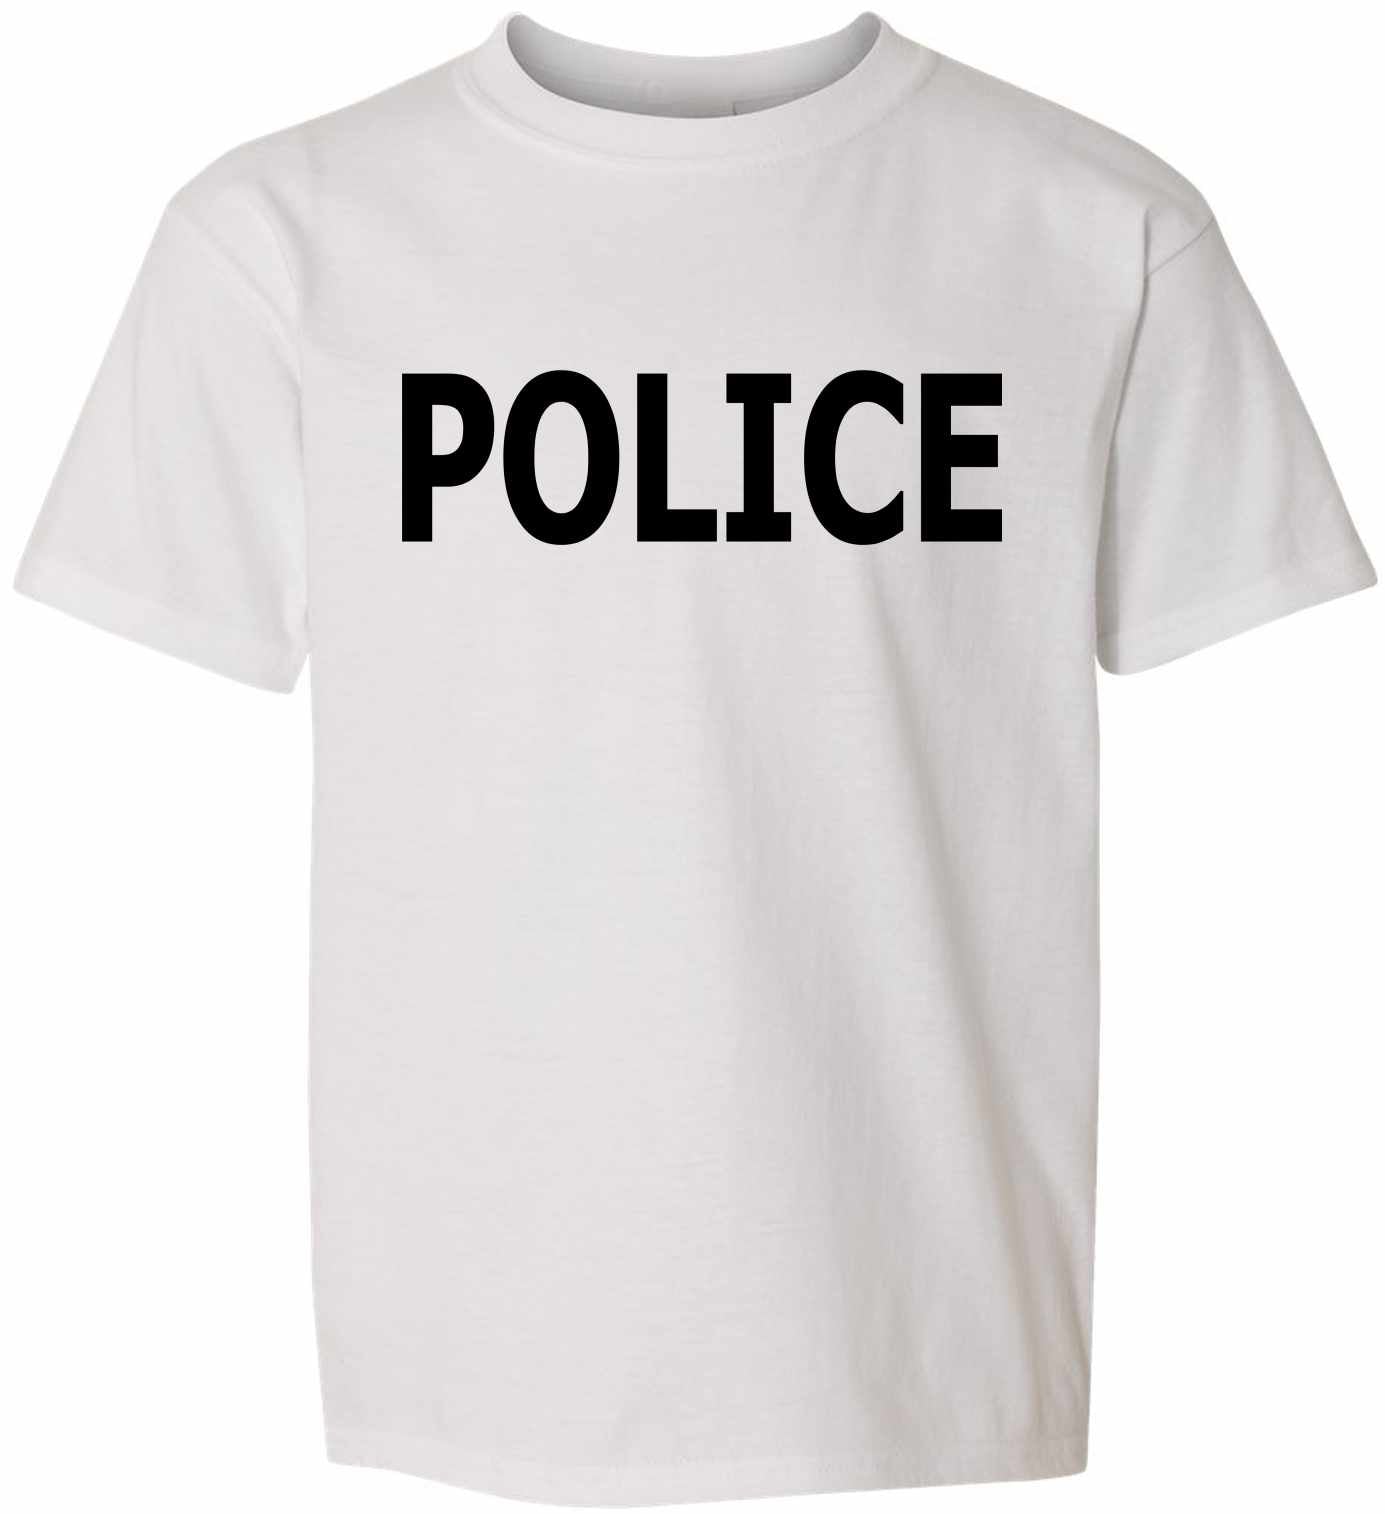 POLICE on Kids T-Shirt (#17-201)